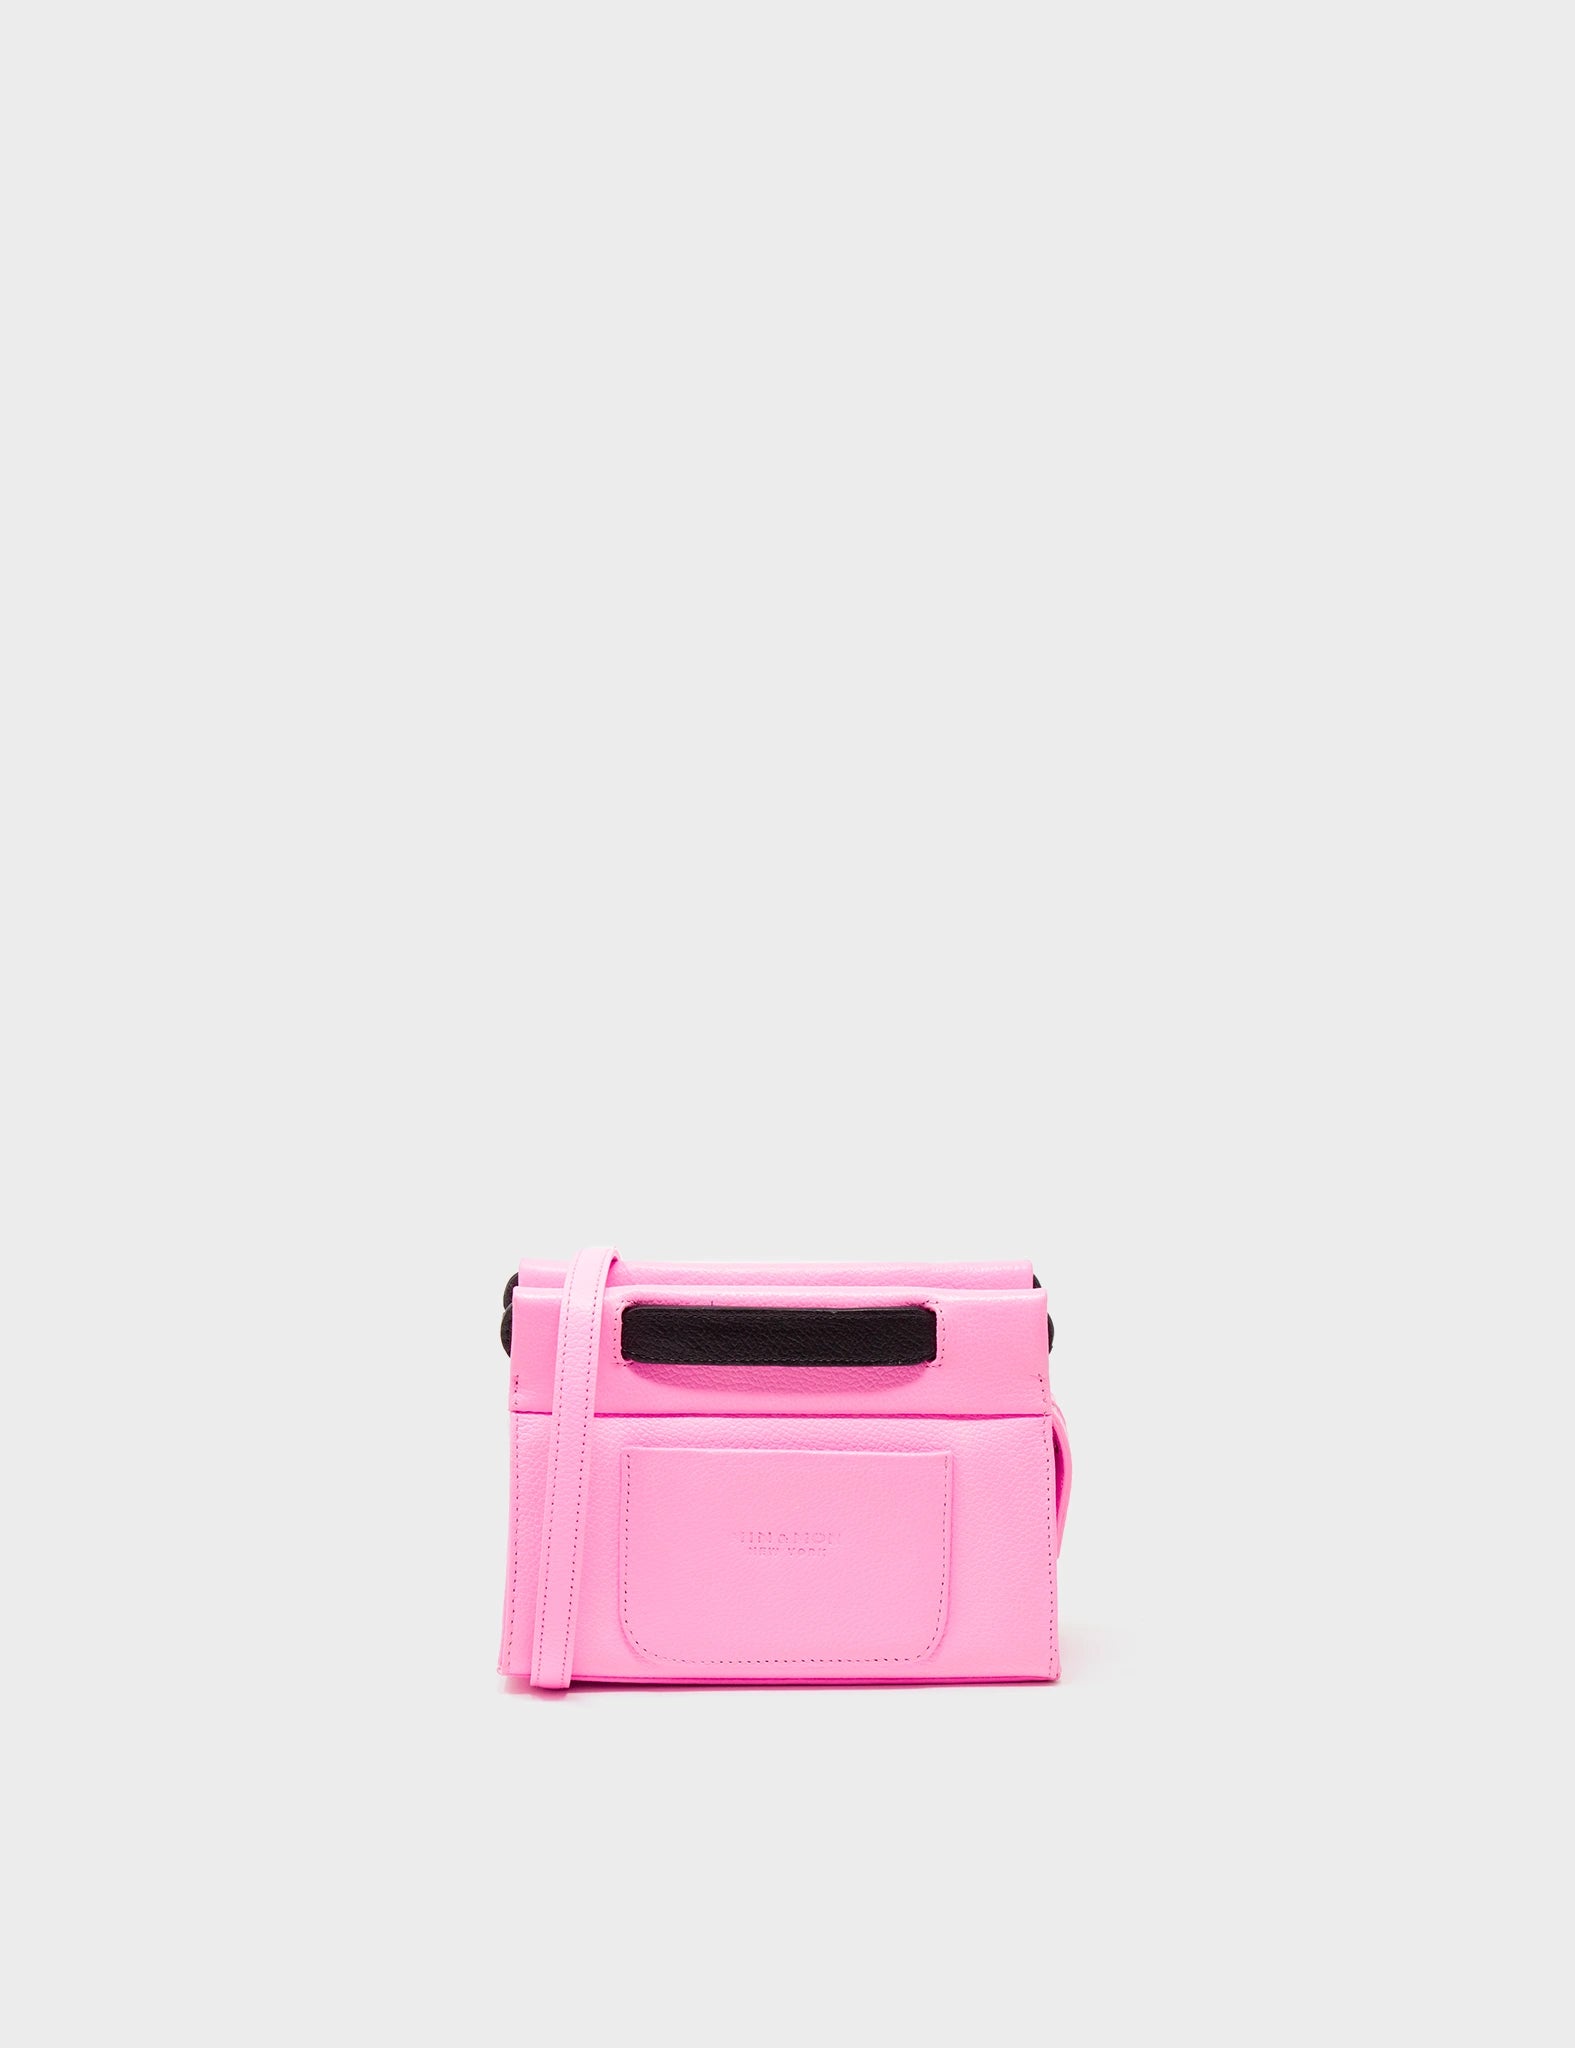 Crossbody Micro Bubblegum Pink Leather Bag - Eyes Applique Adjustable Handle - Back